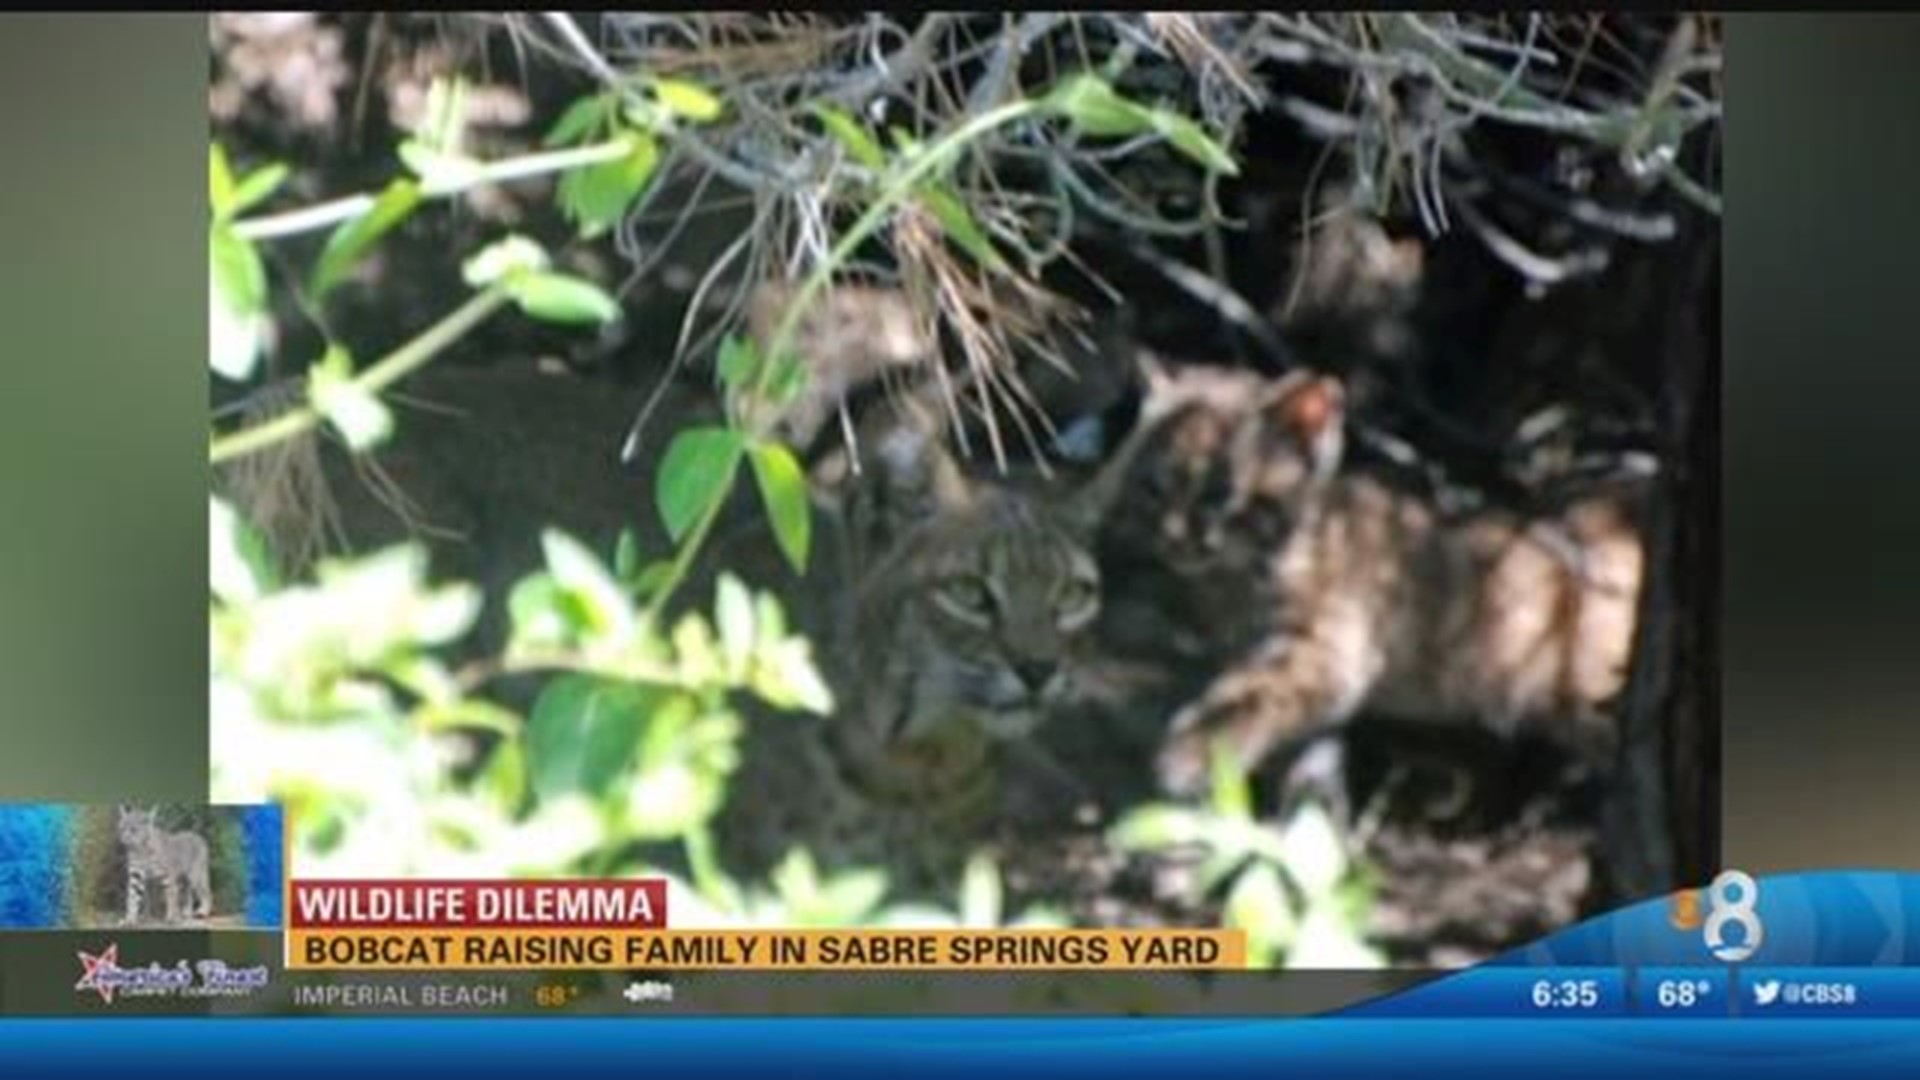 Bobcat creates problems for Sabre Springs yard